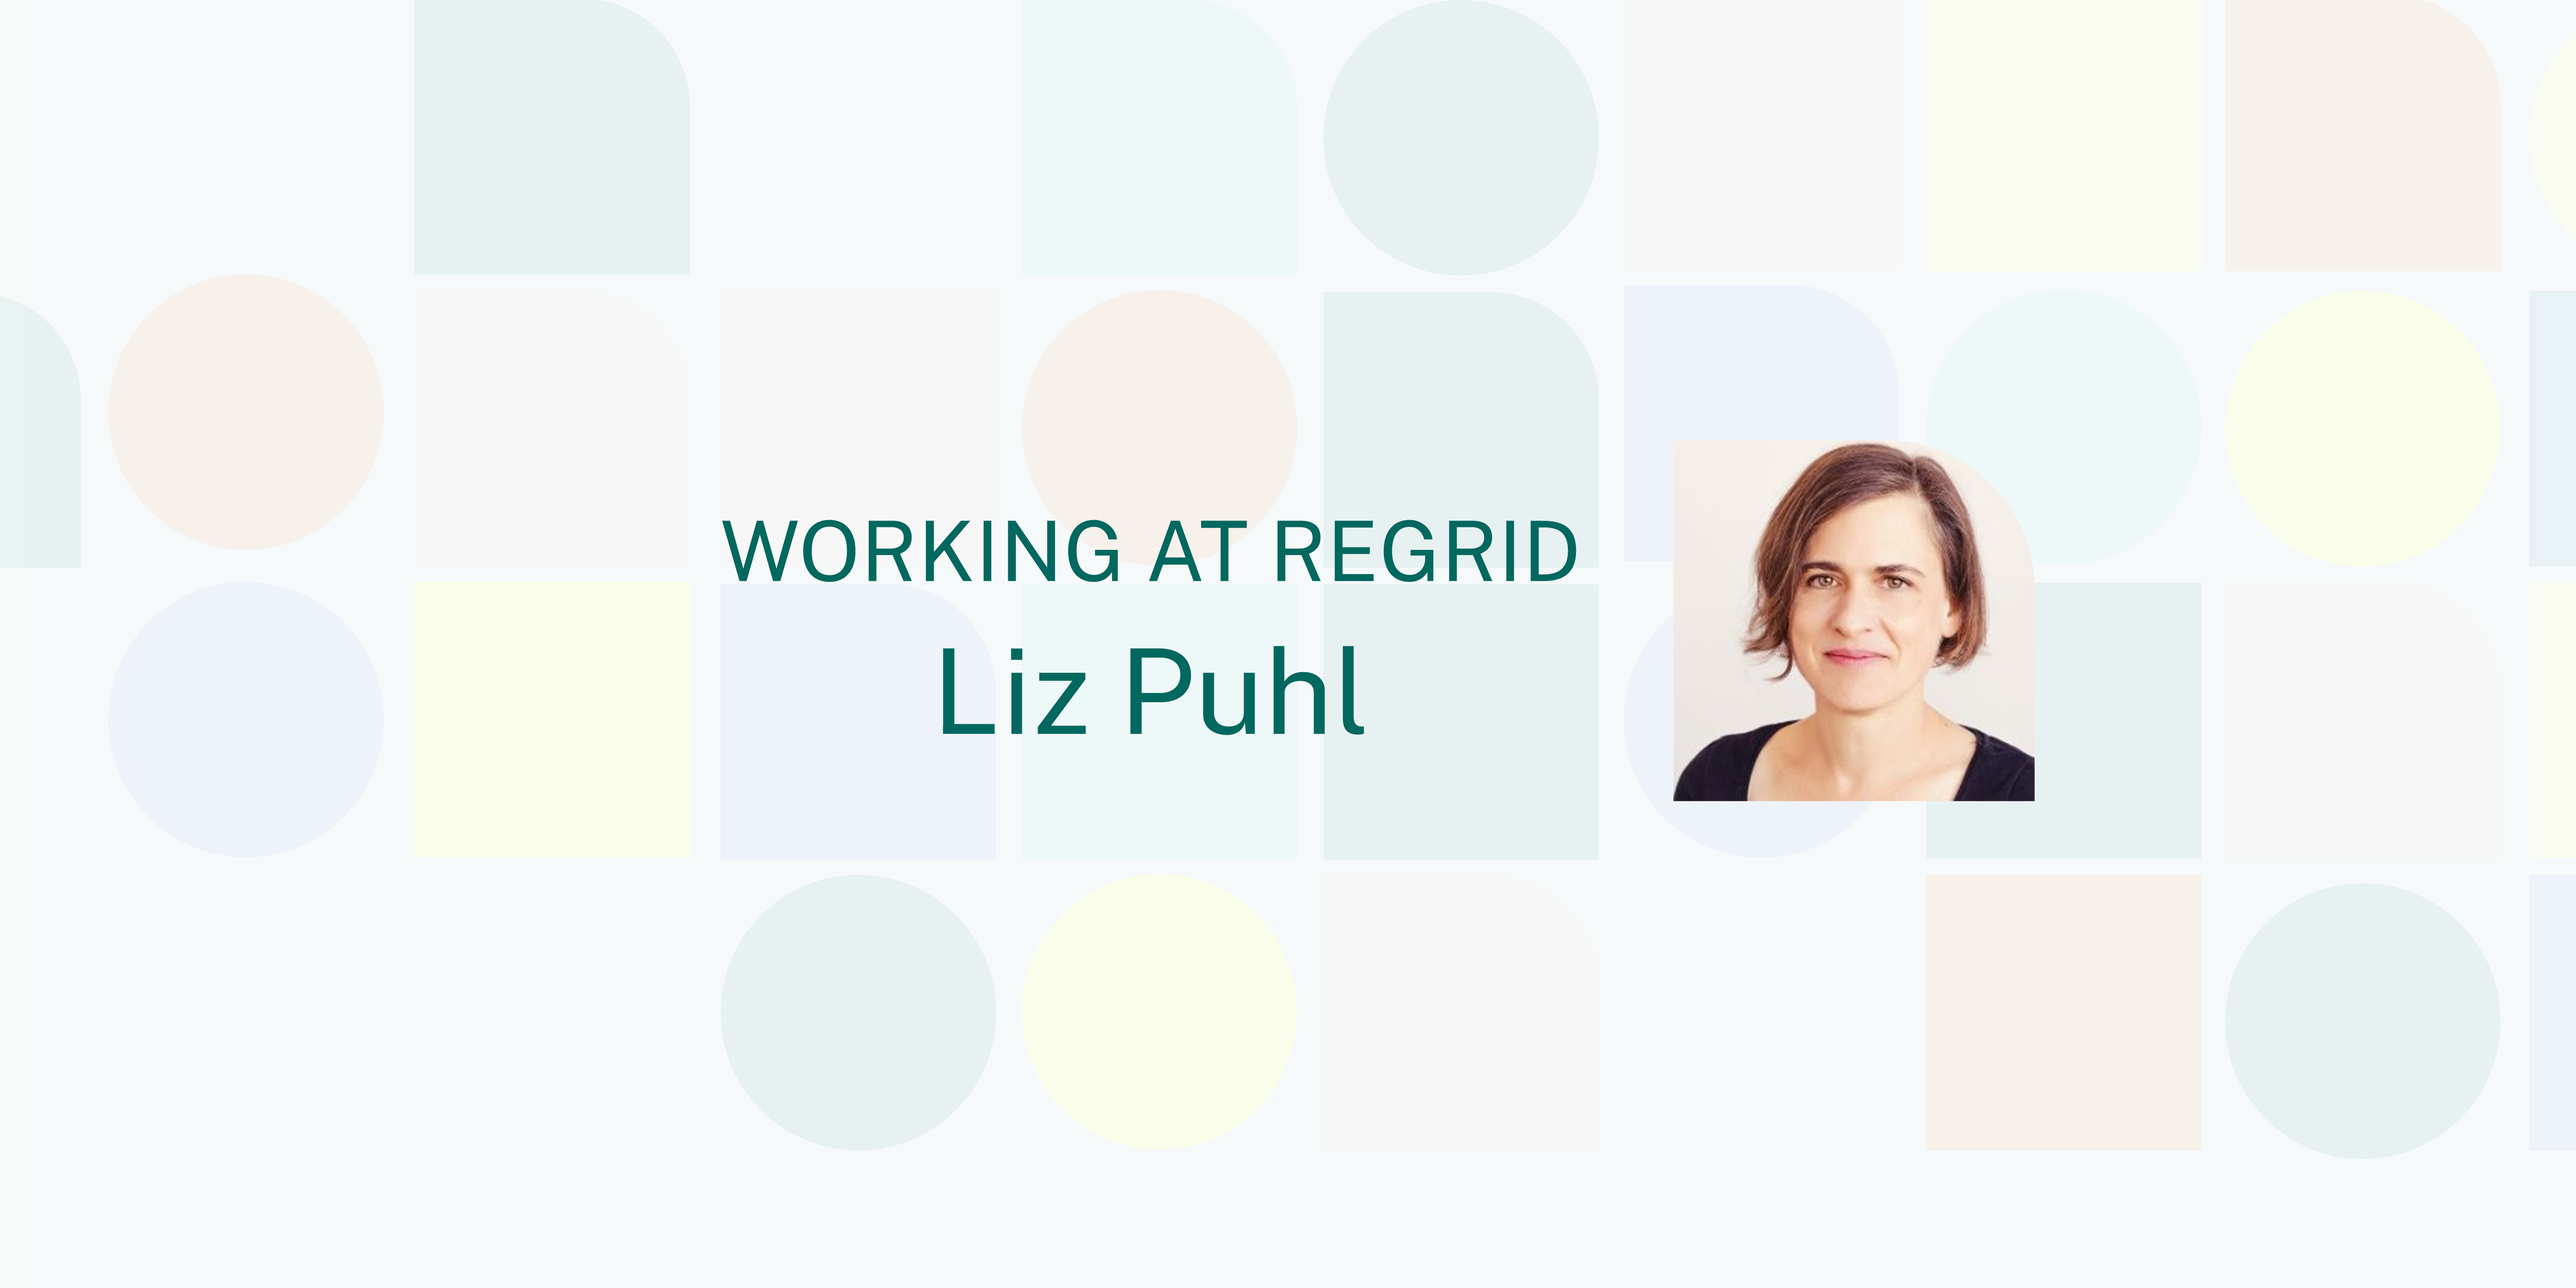 Working at Regrid, Liz Puhl